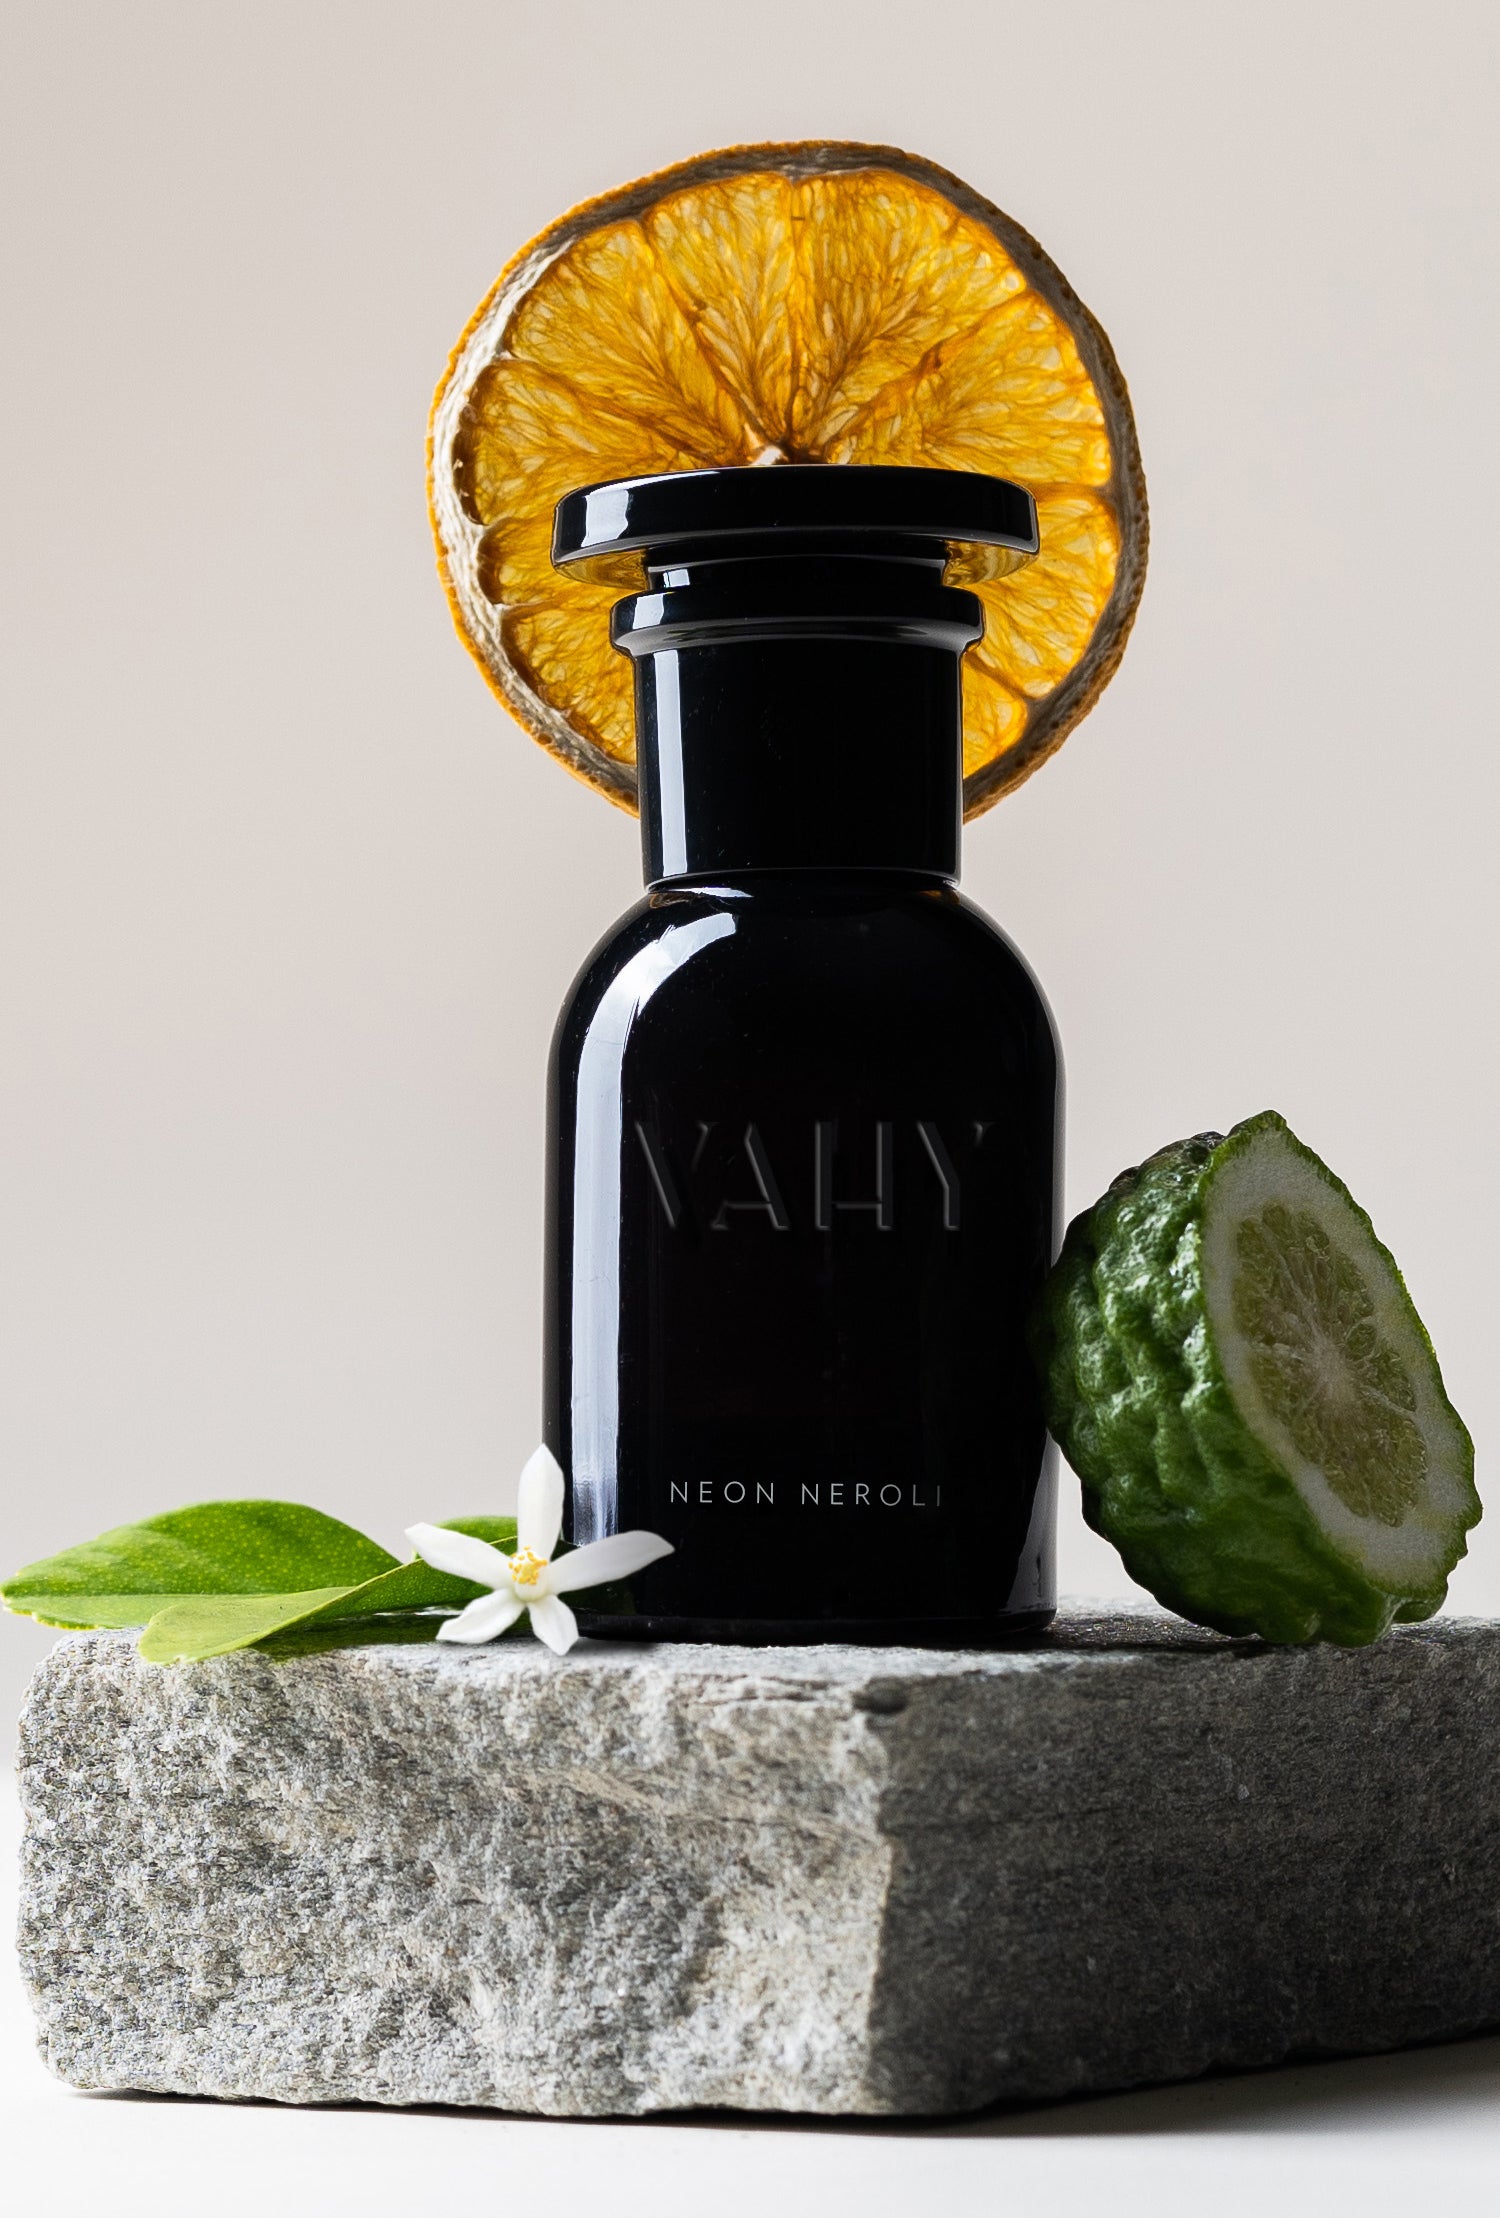 Vahy Neon Neroli natural perfume available at Sensoriam